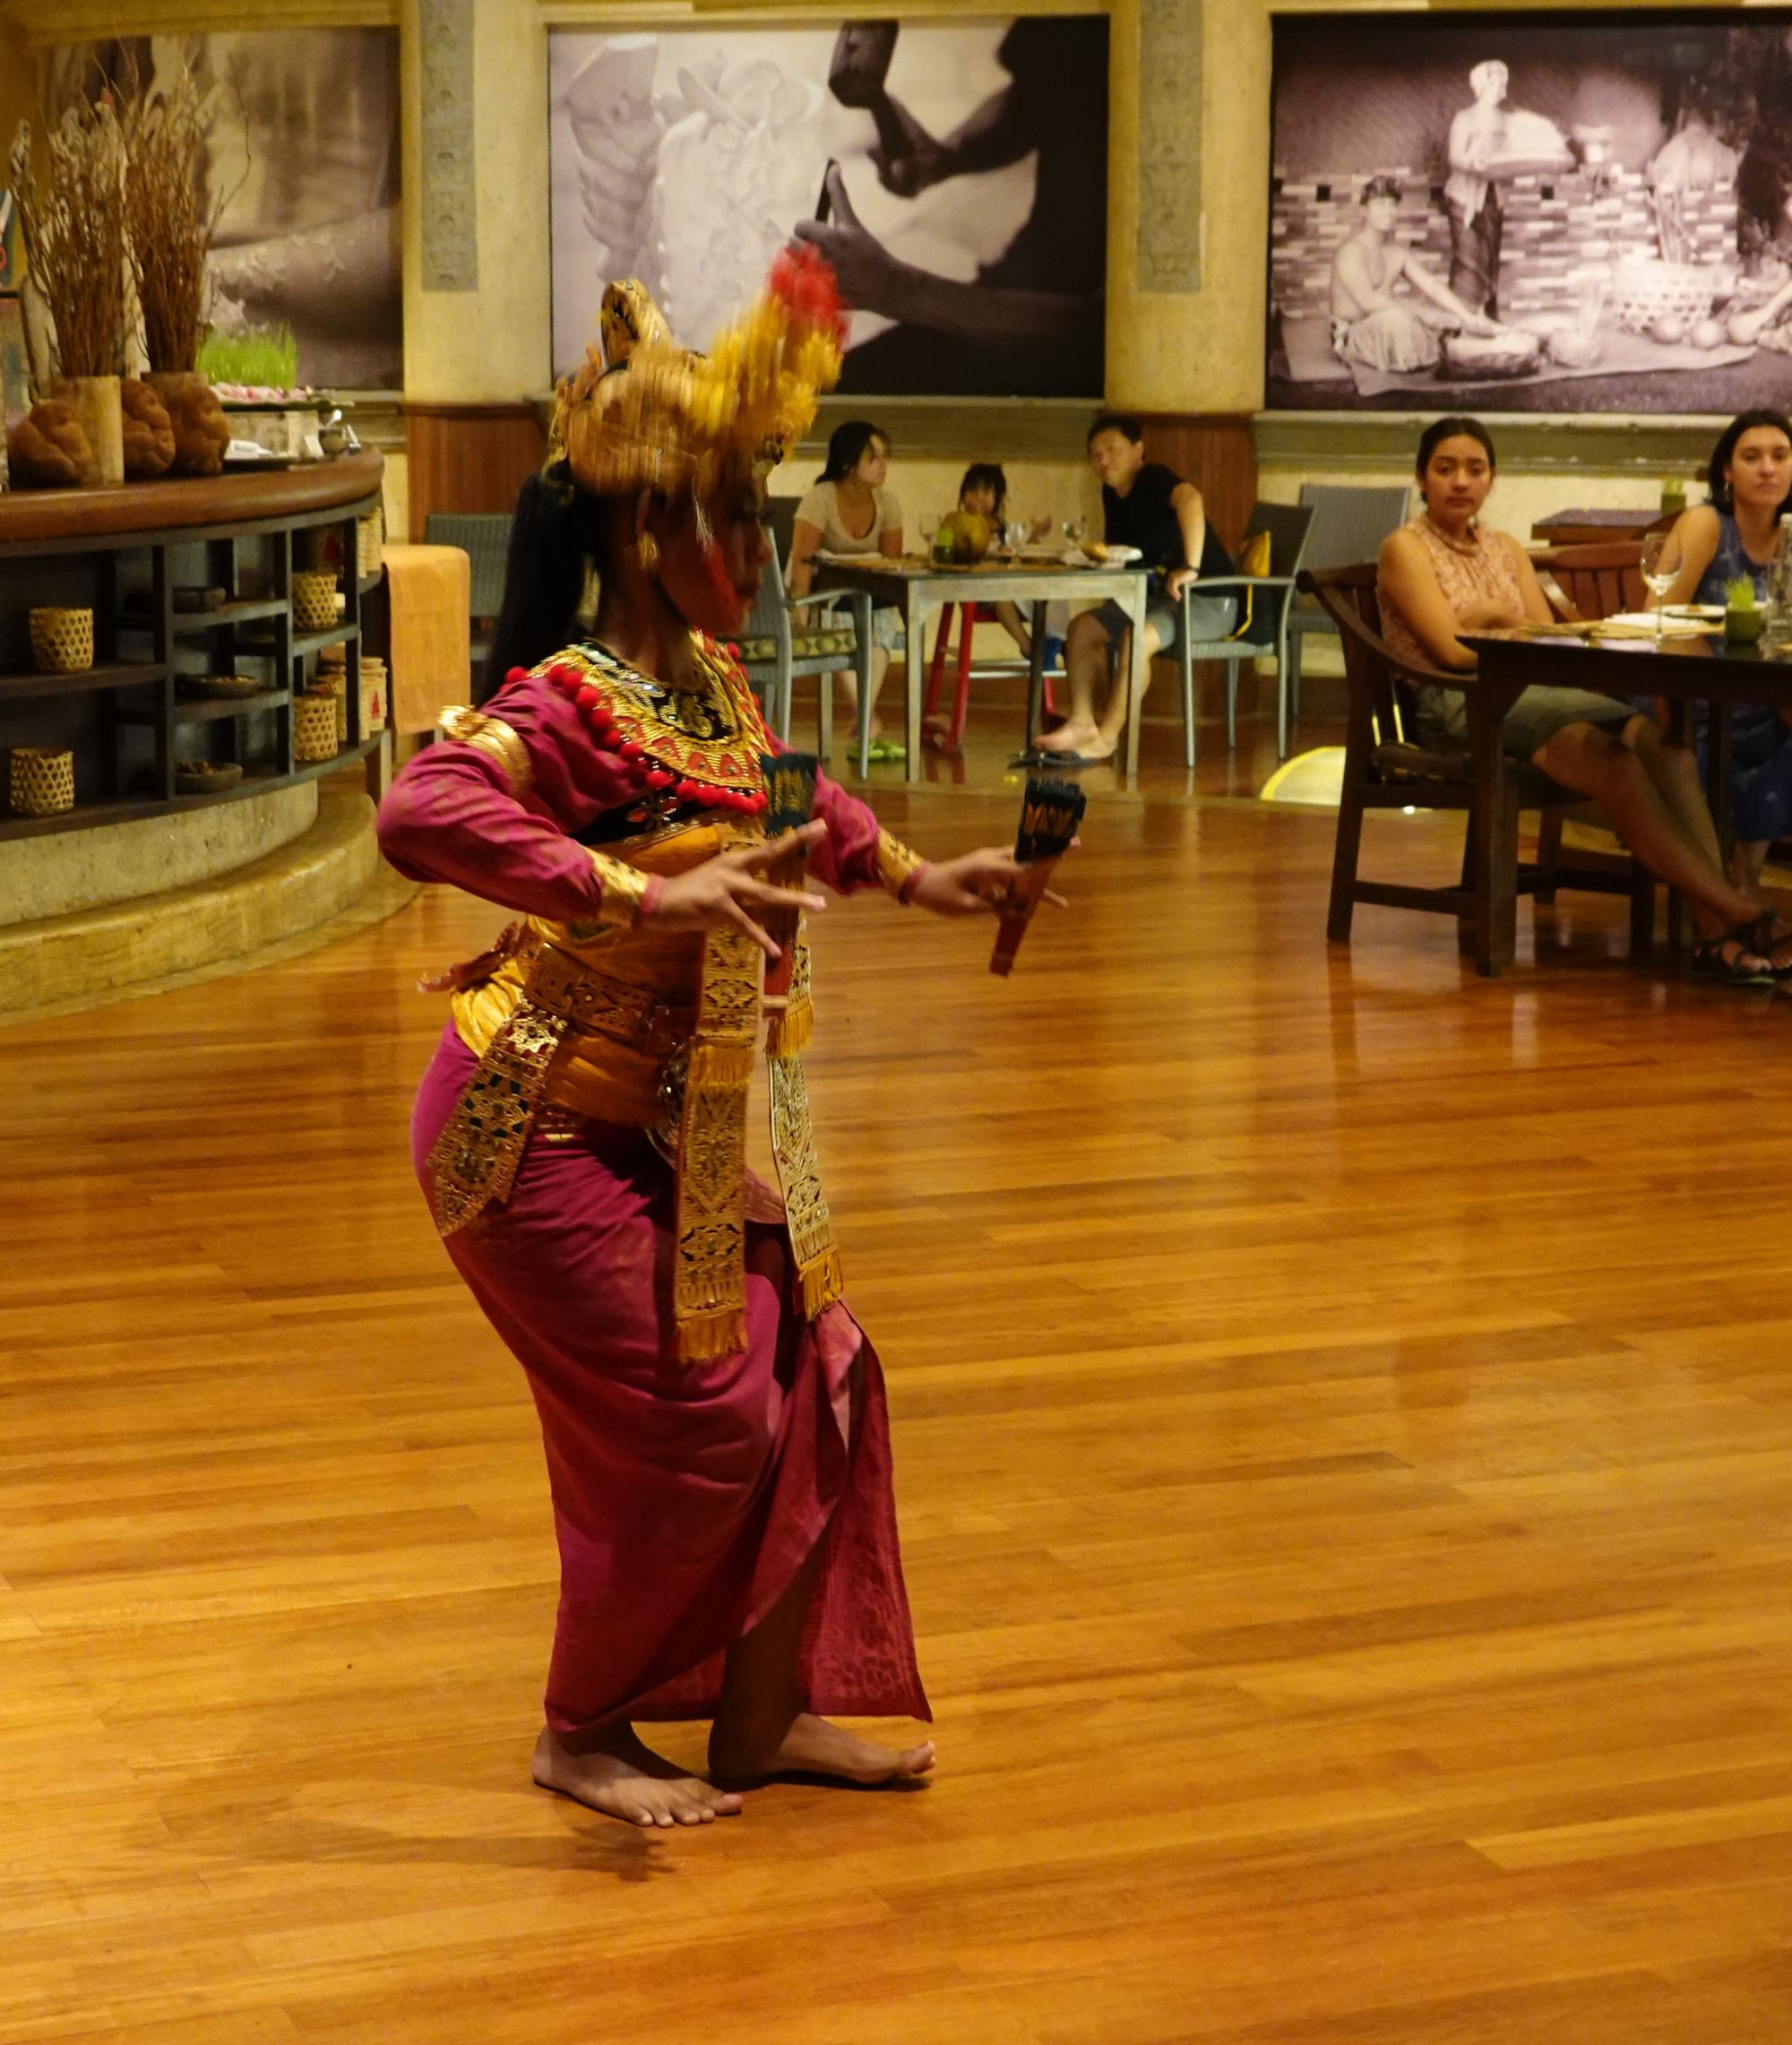 Bali - Bali Dancing #6